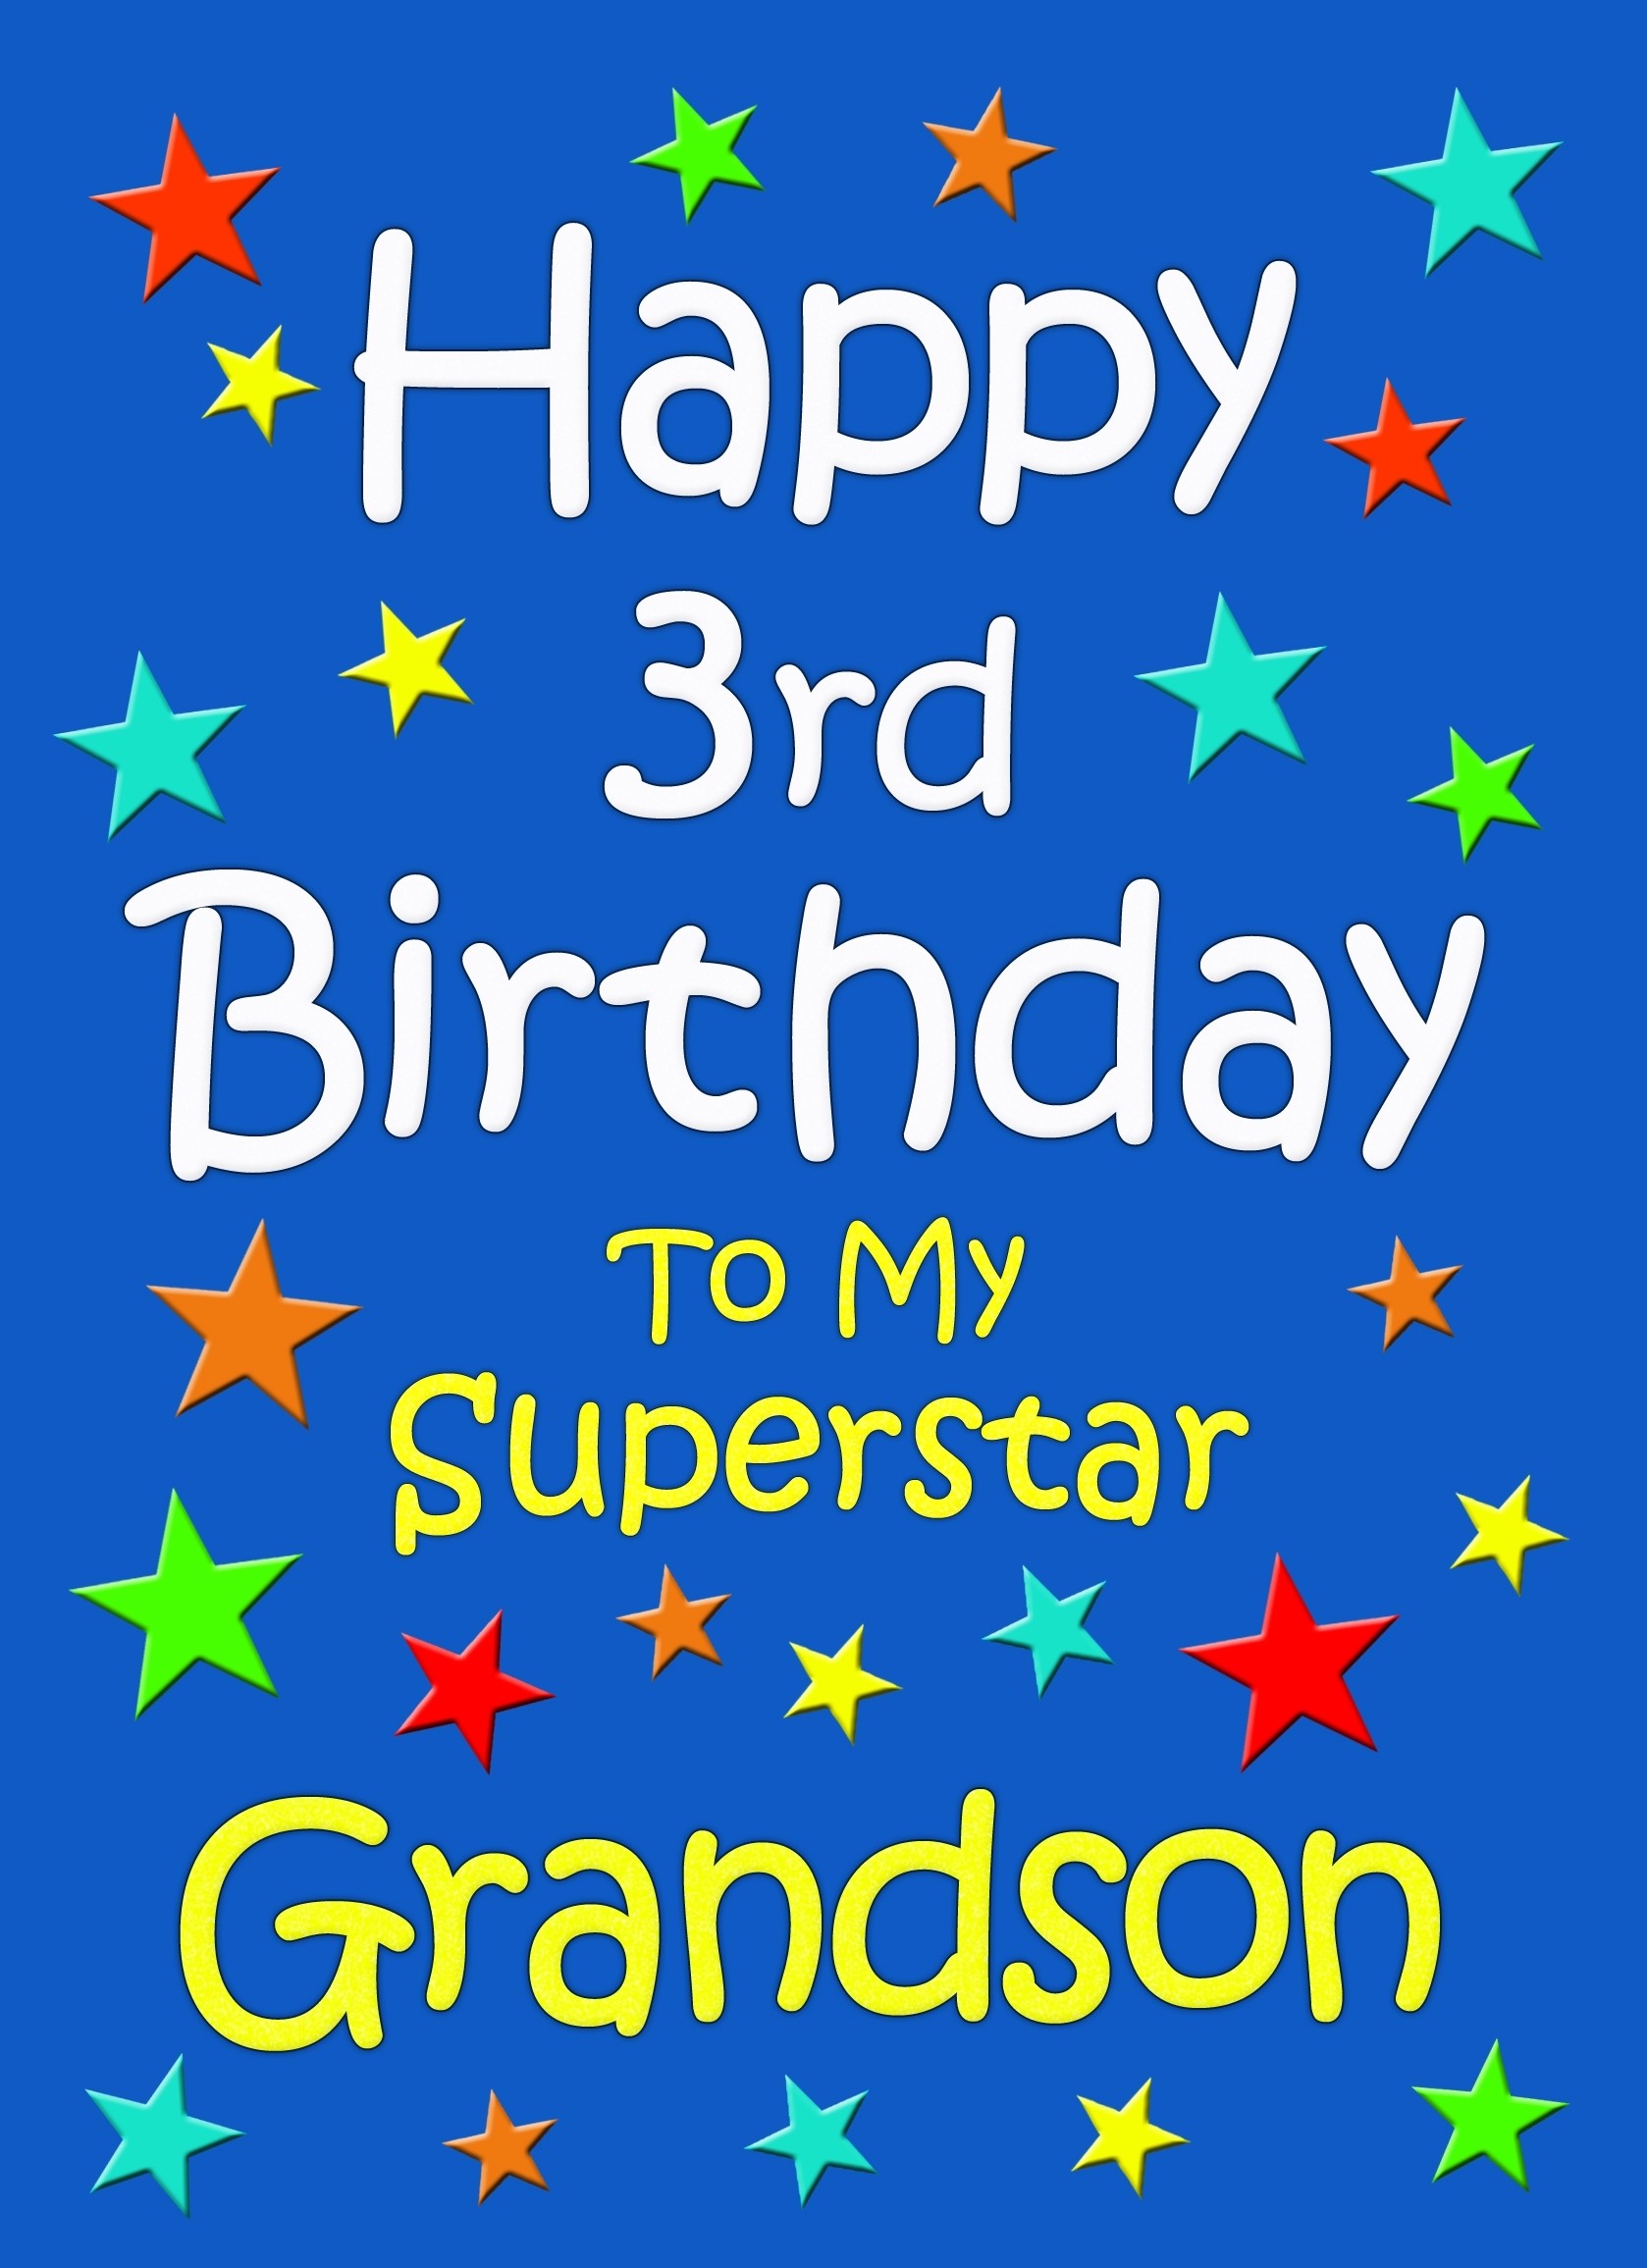 Grandson 3rd Birthday Card (Blue)